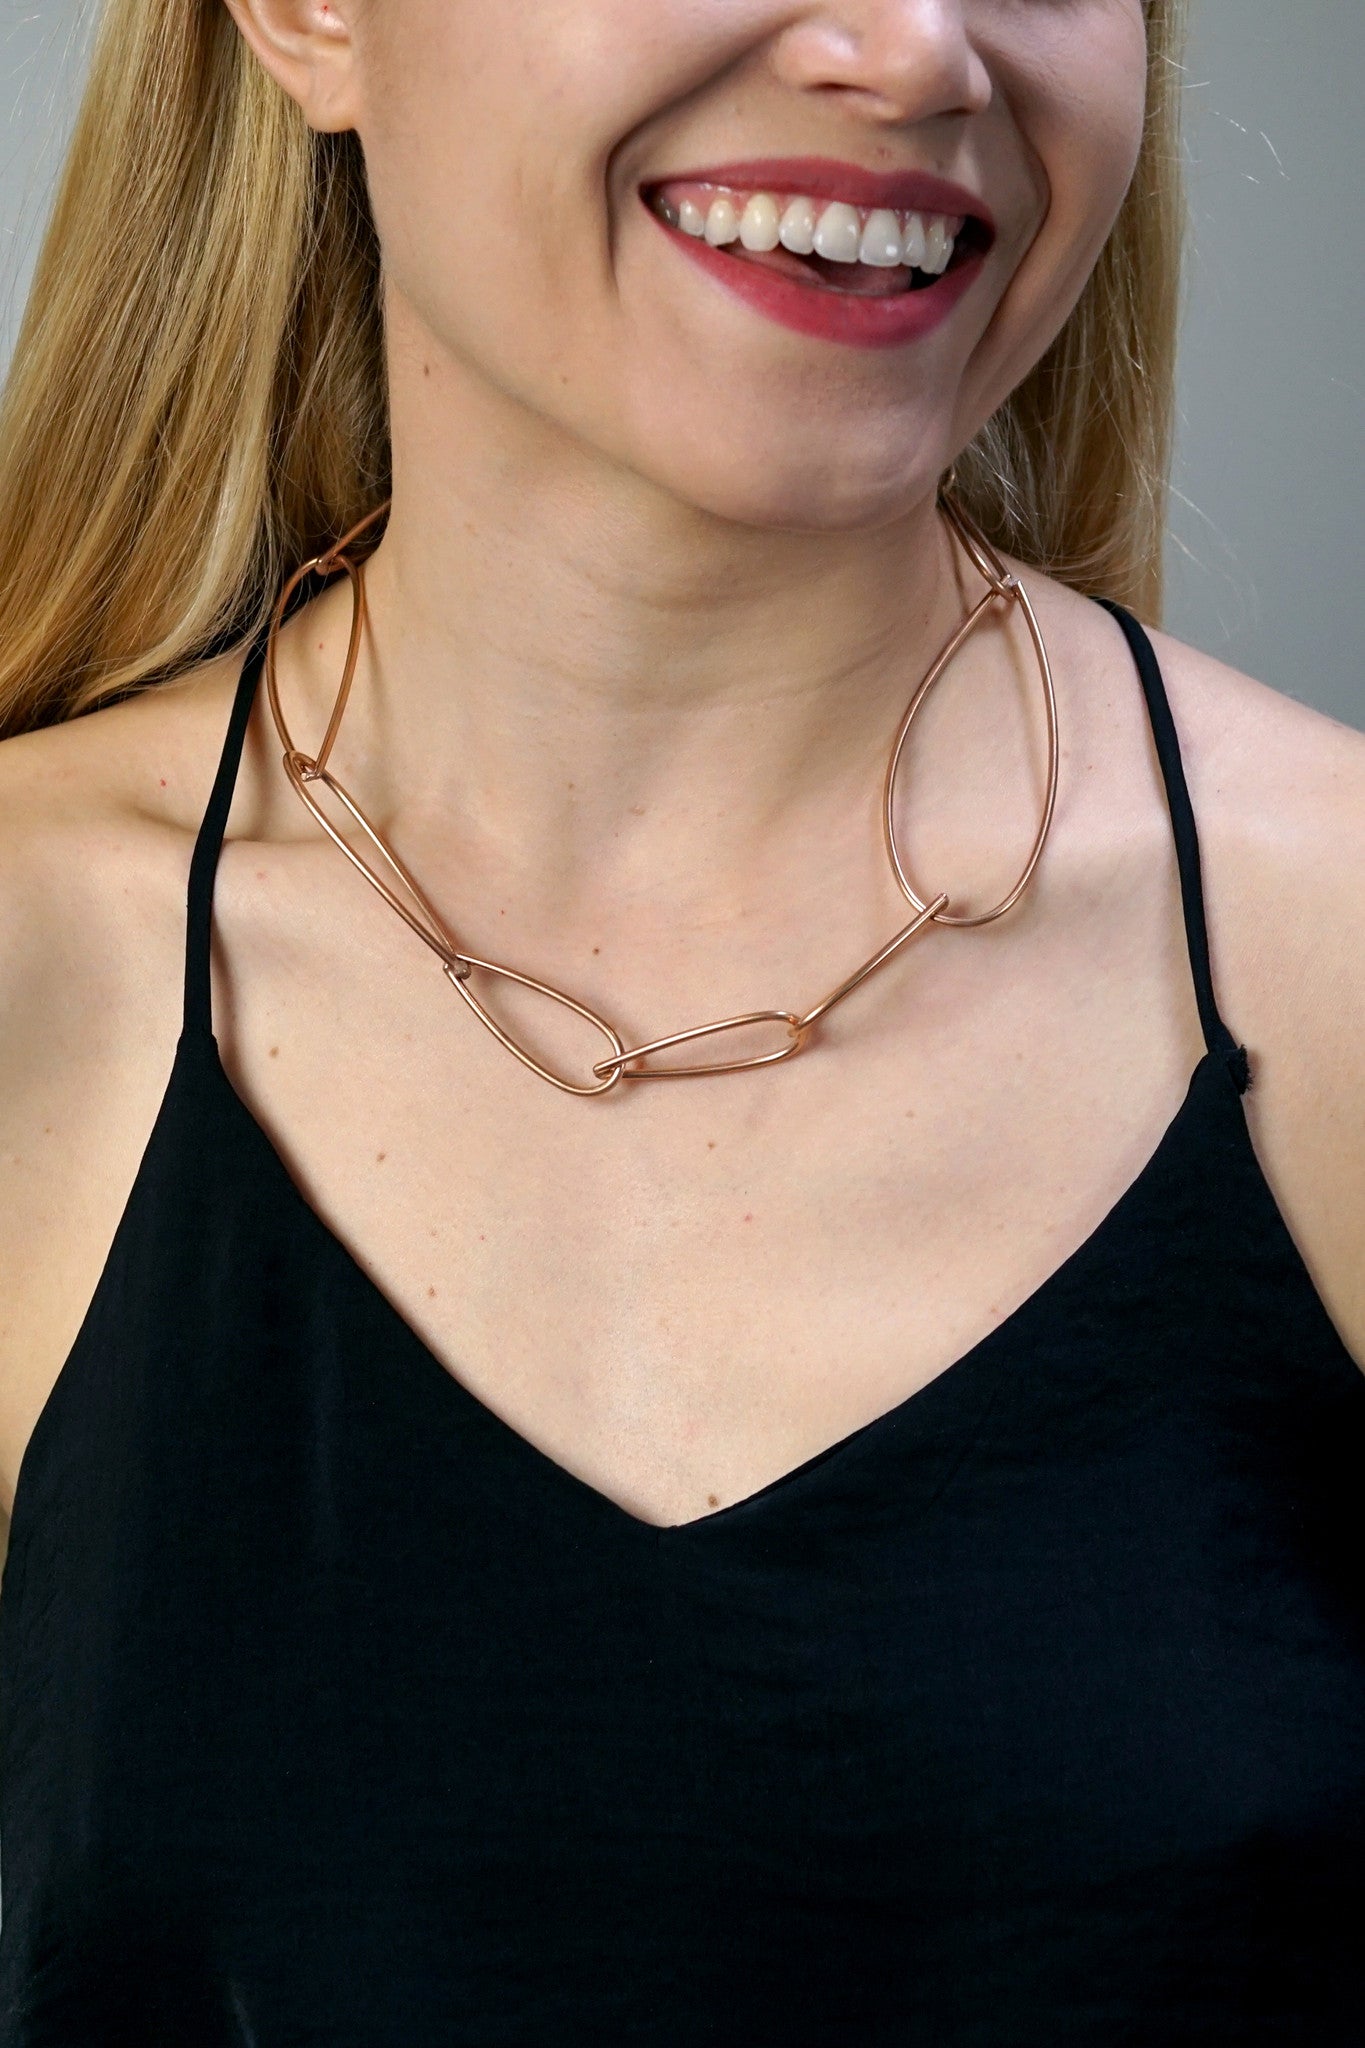 Modular Necklace No. 2 in bronze